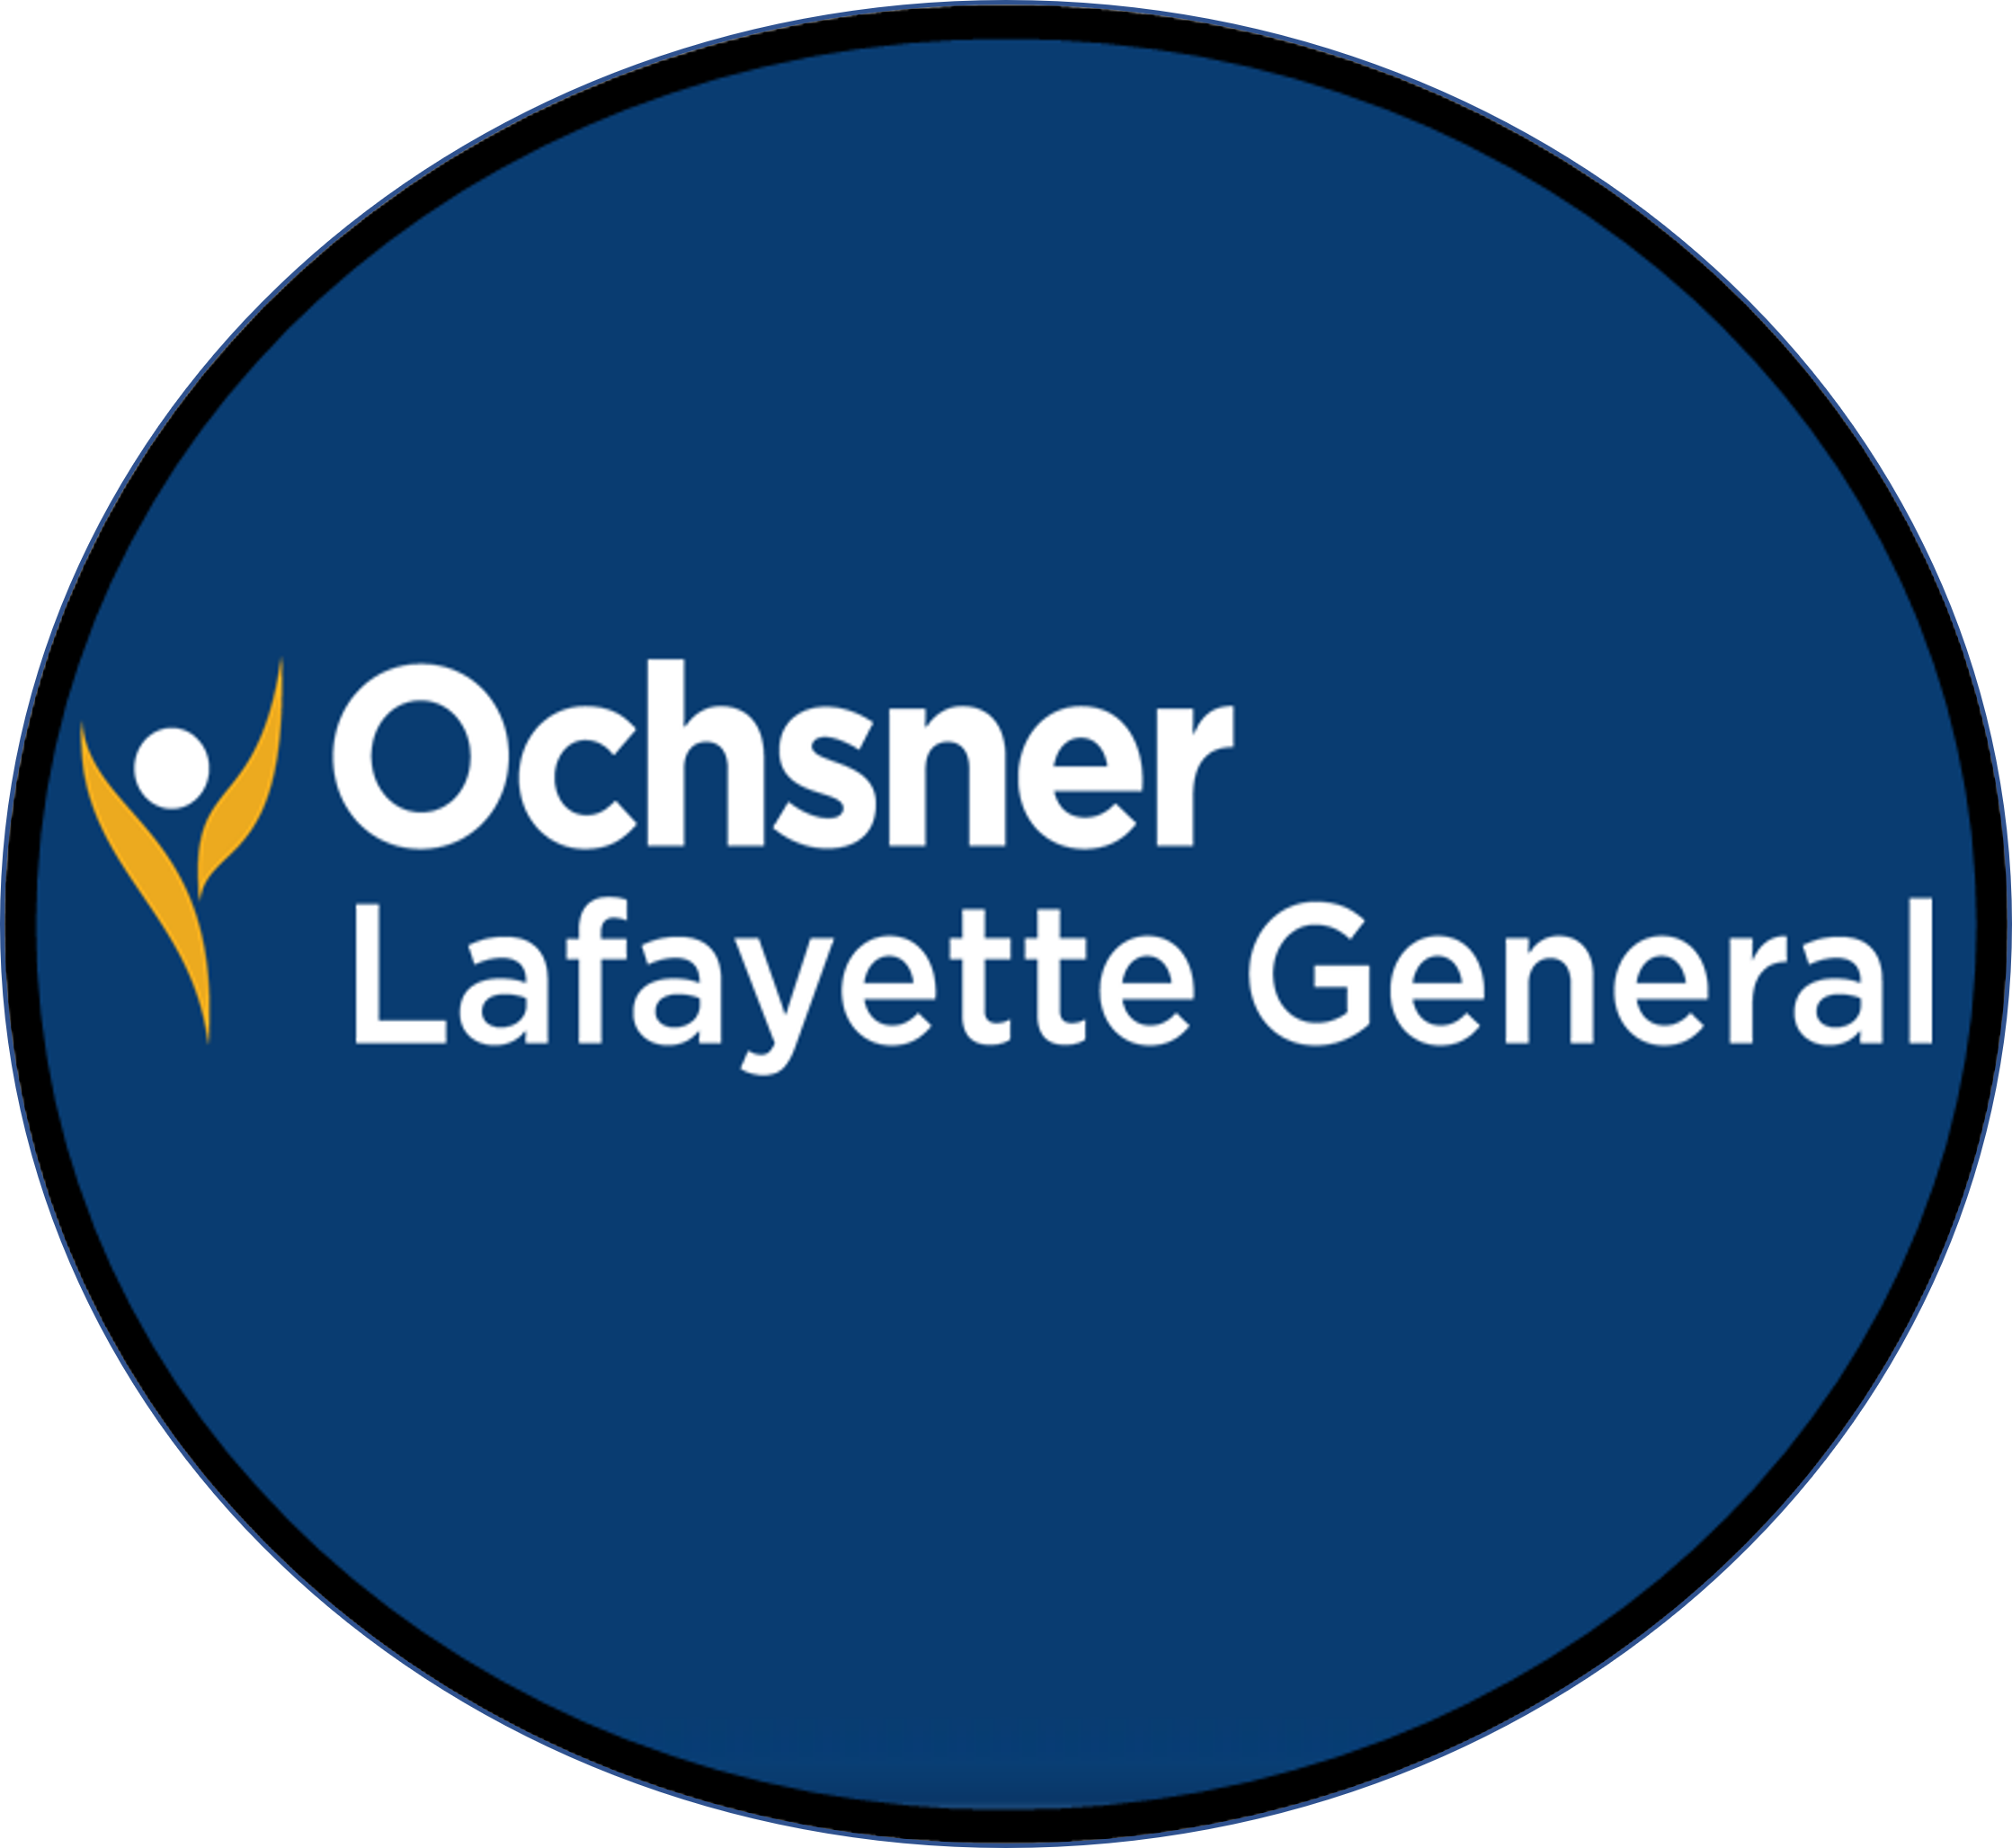 Ochsner Lafayette General